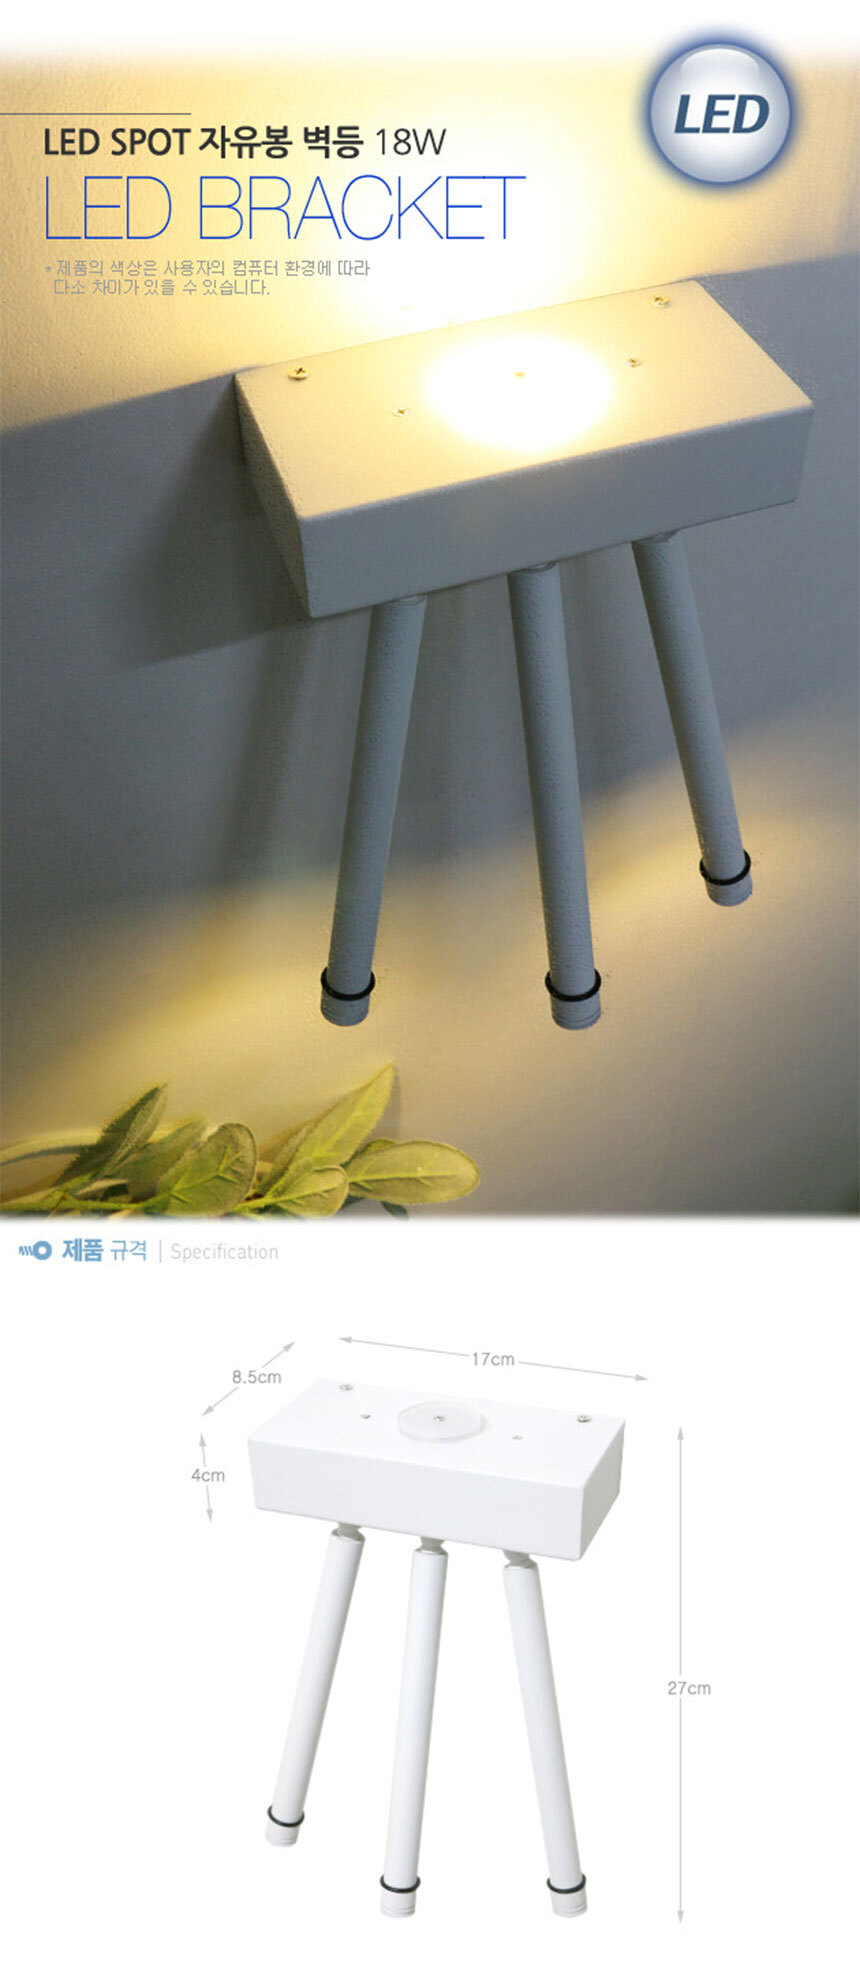 LED SPOT 자유봉 벽등 18W LED BRACKET
제품 규격 W17cm * D8.5cm * H27cm
